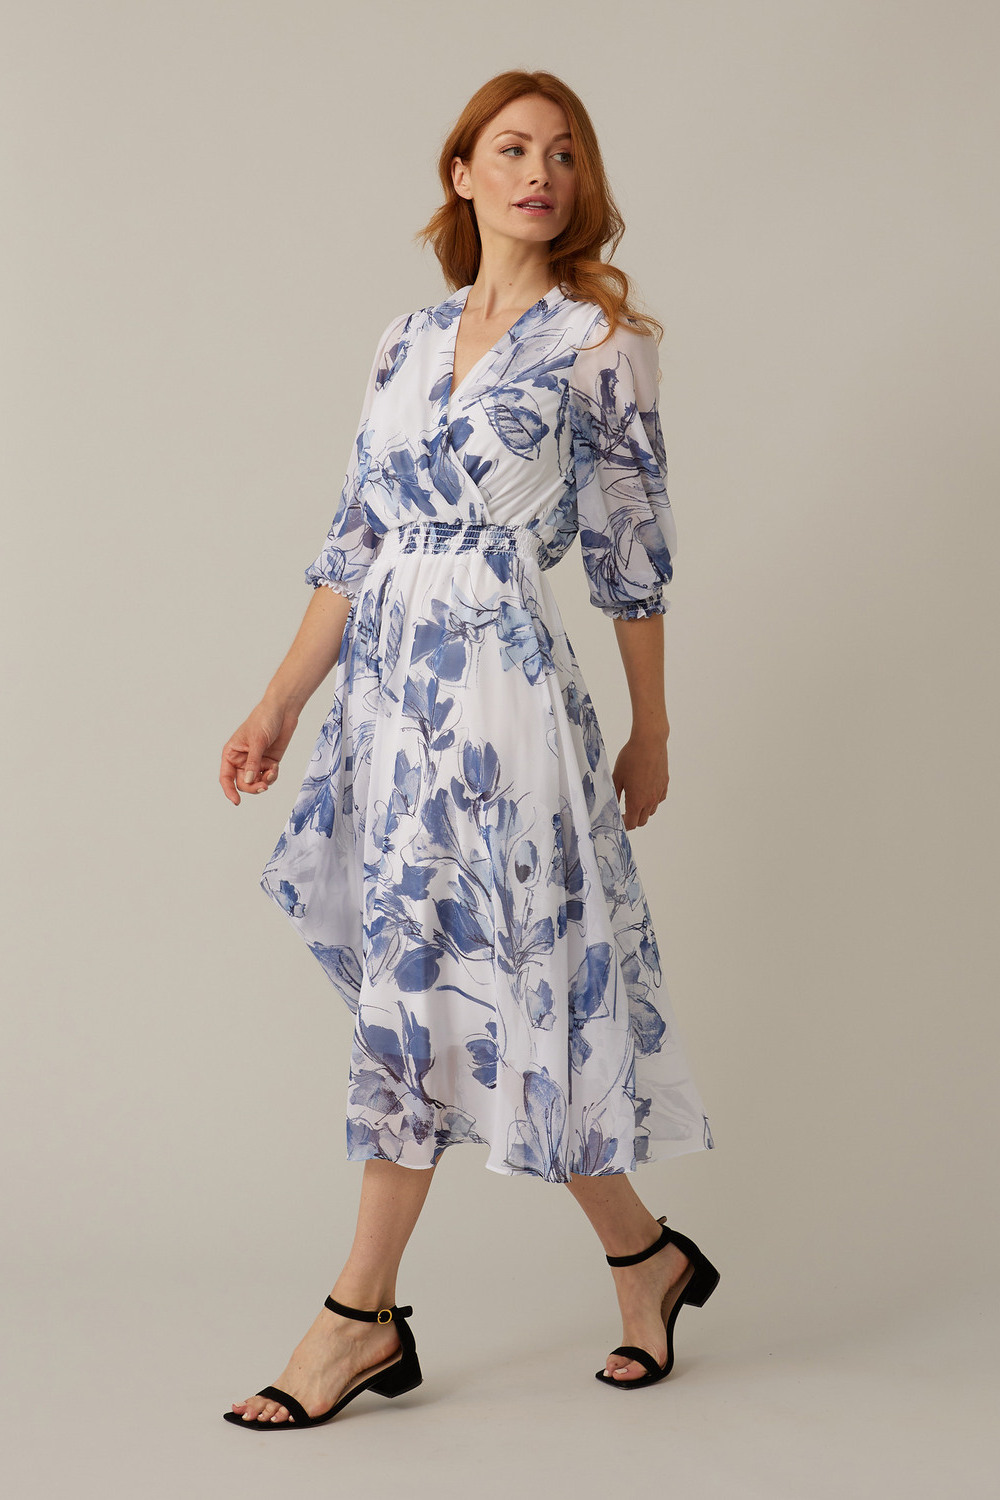 Joseph Ribkoff Wrap Front Floral Dress Style 221344. Blue/vanilla